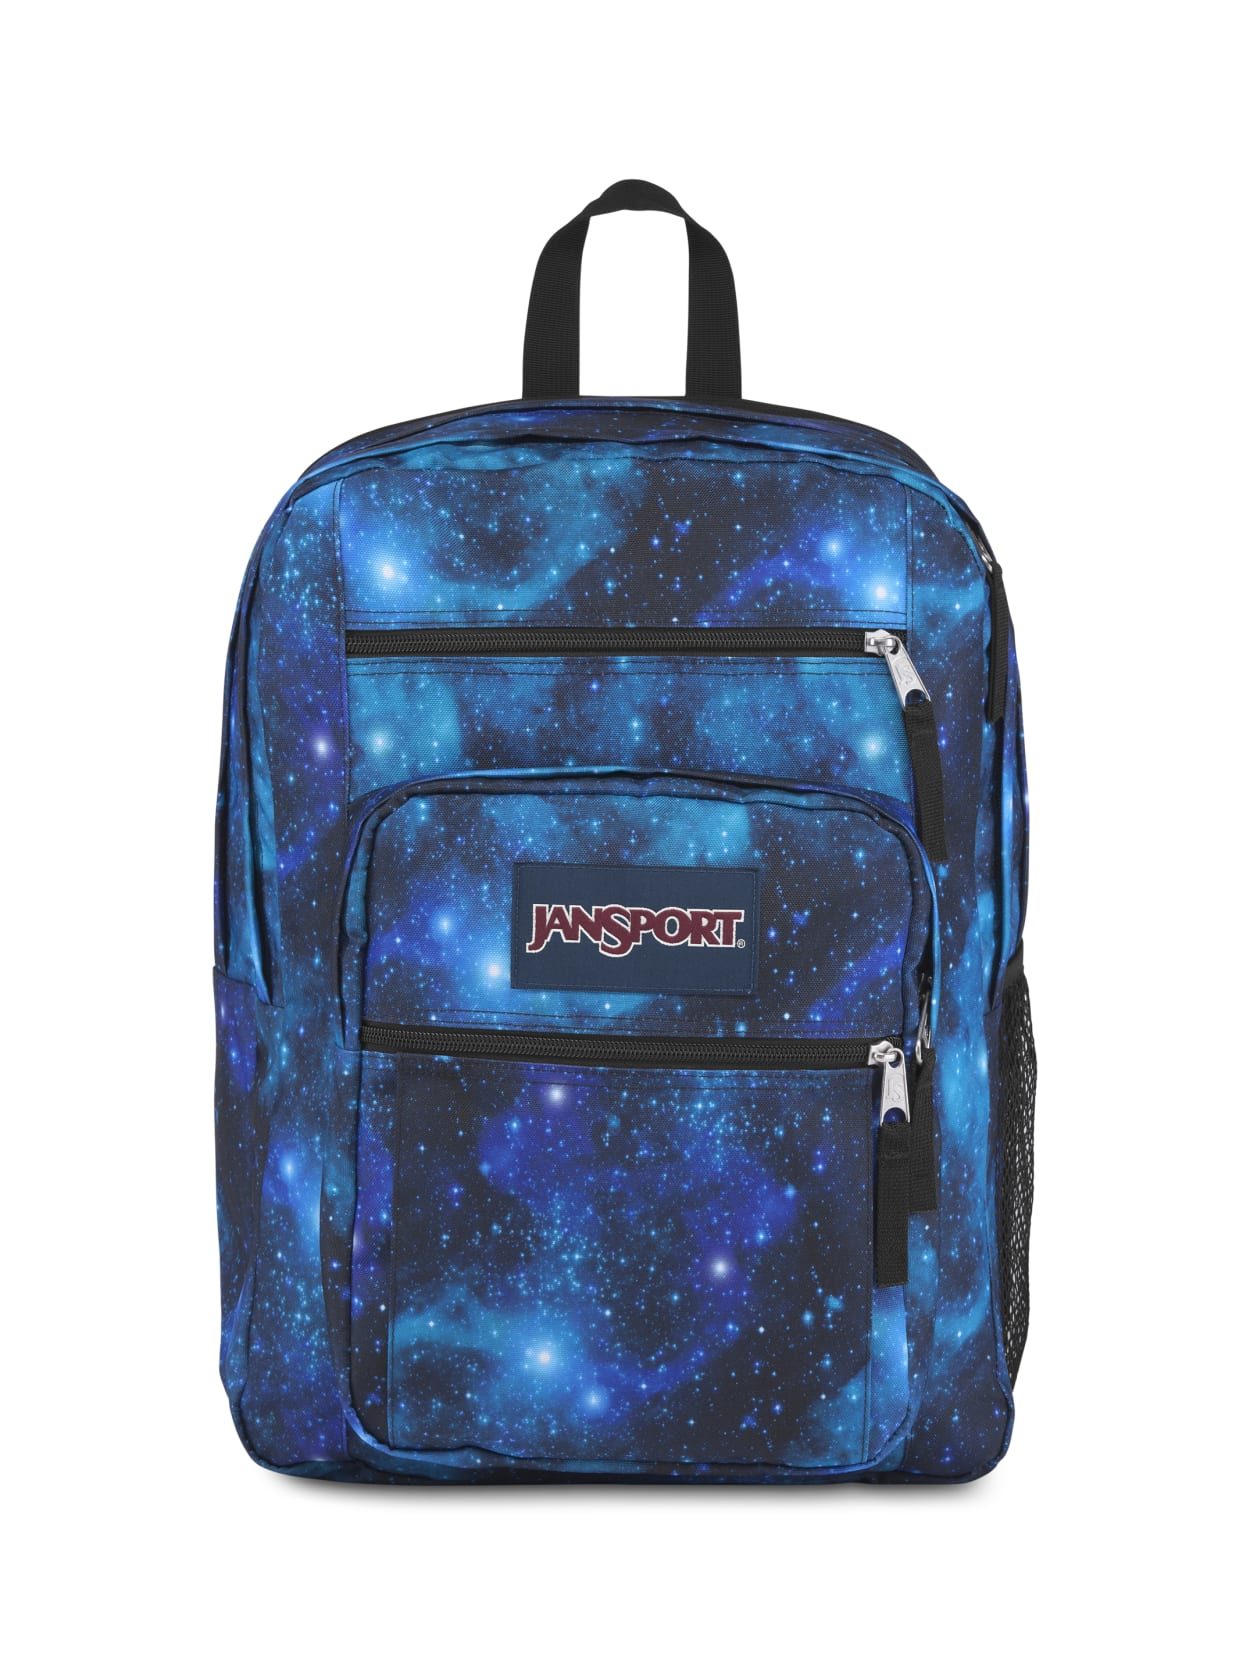 jansport backpack galaxy print